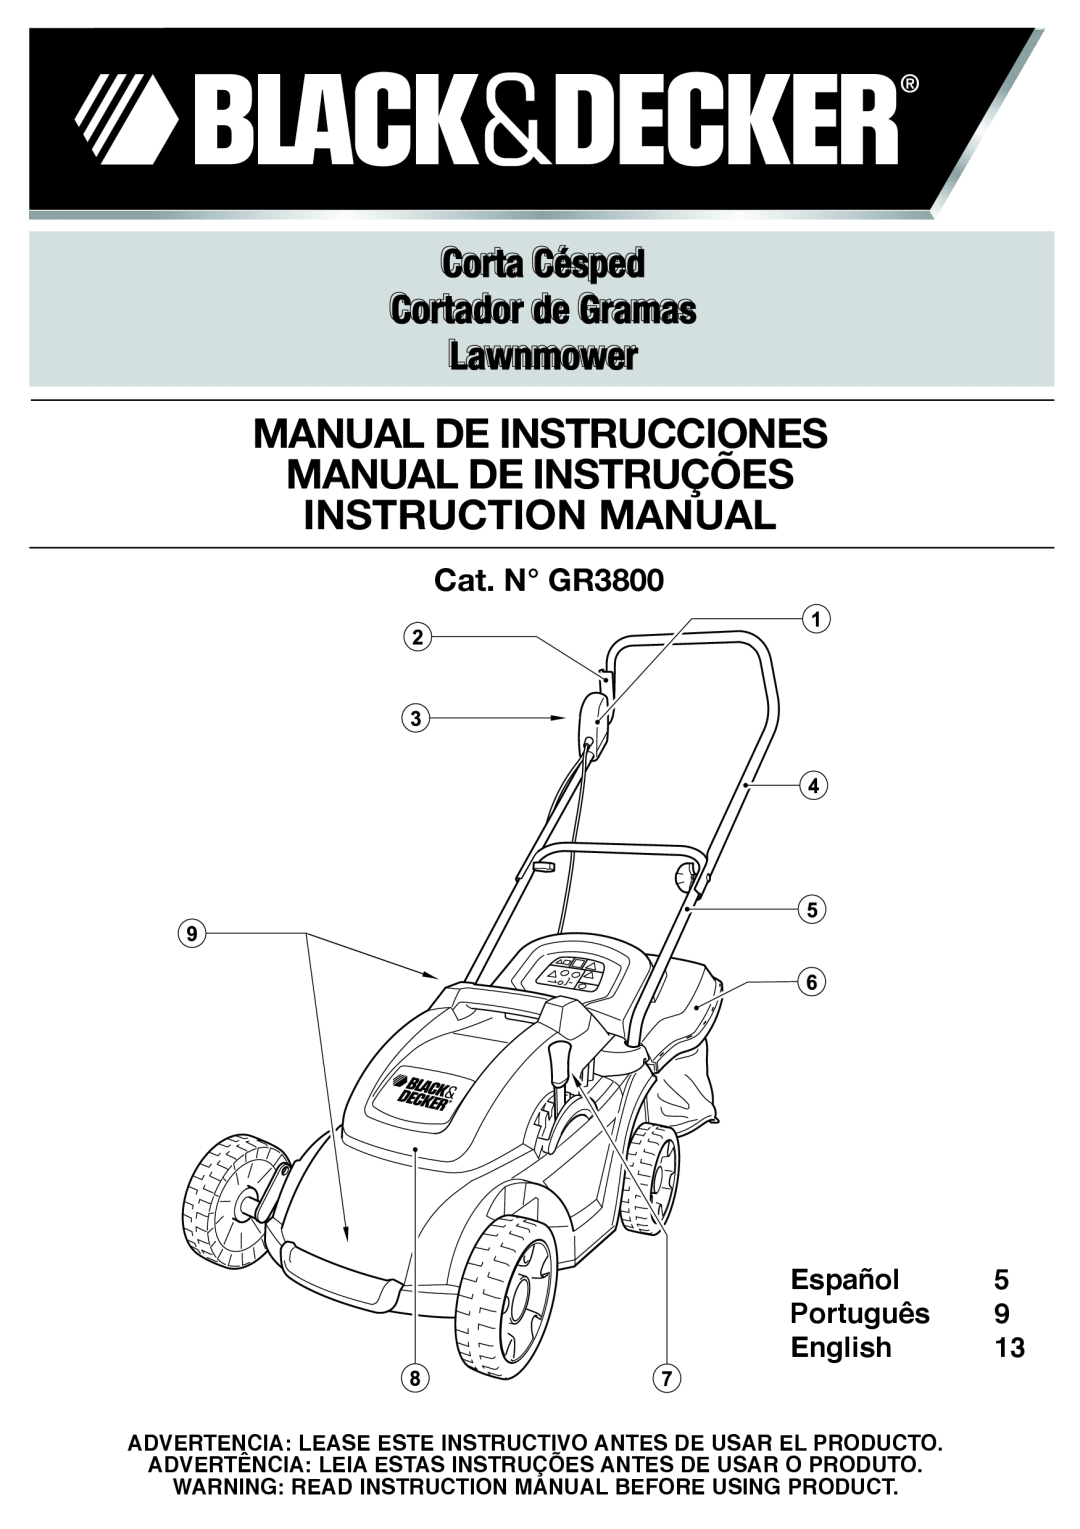 Black & Decker 661817-00 instruction manual Corta Césped Cortador de Gramas Lawnmower, Cat. N GR3800 